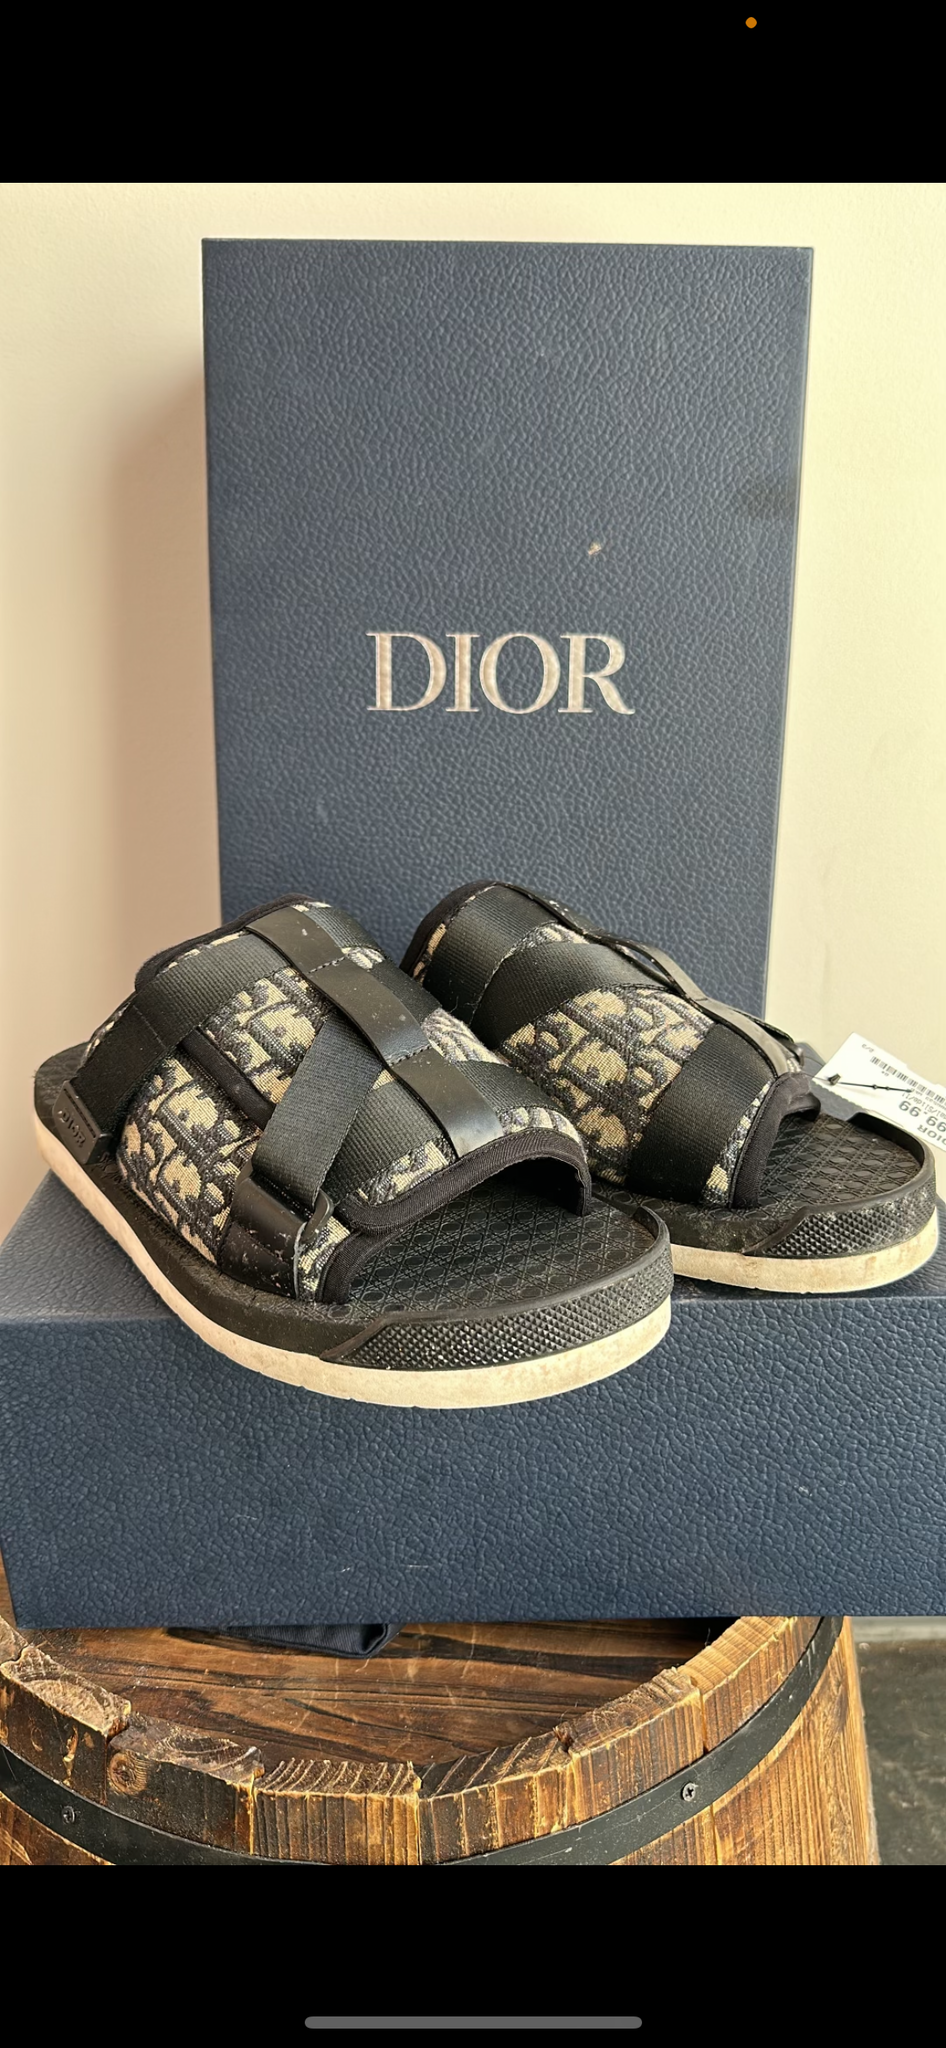 Dior Men’s sandals